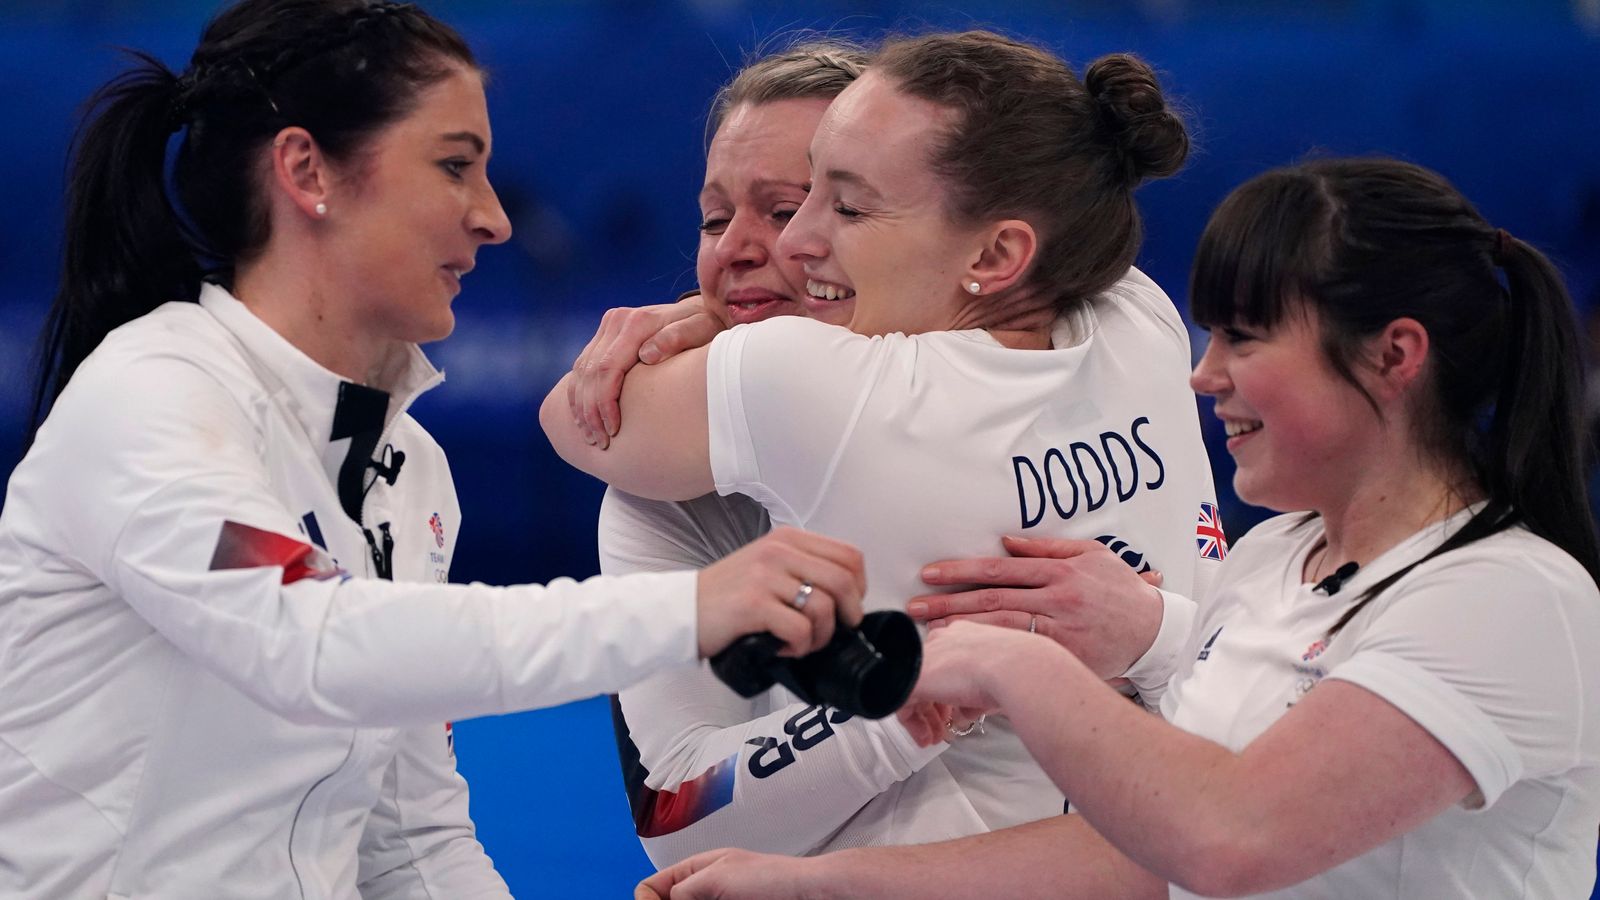 Winter Olympics: Great Britain win gold in women’s curling as Team GB thrash Japan in final